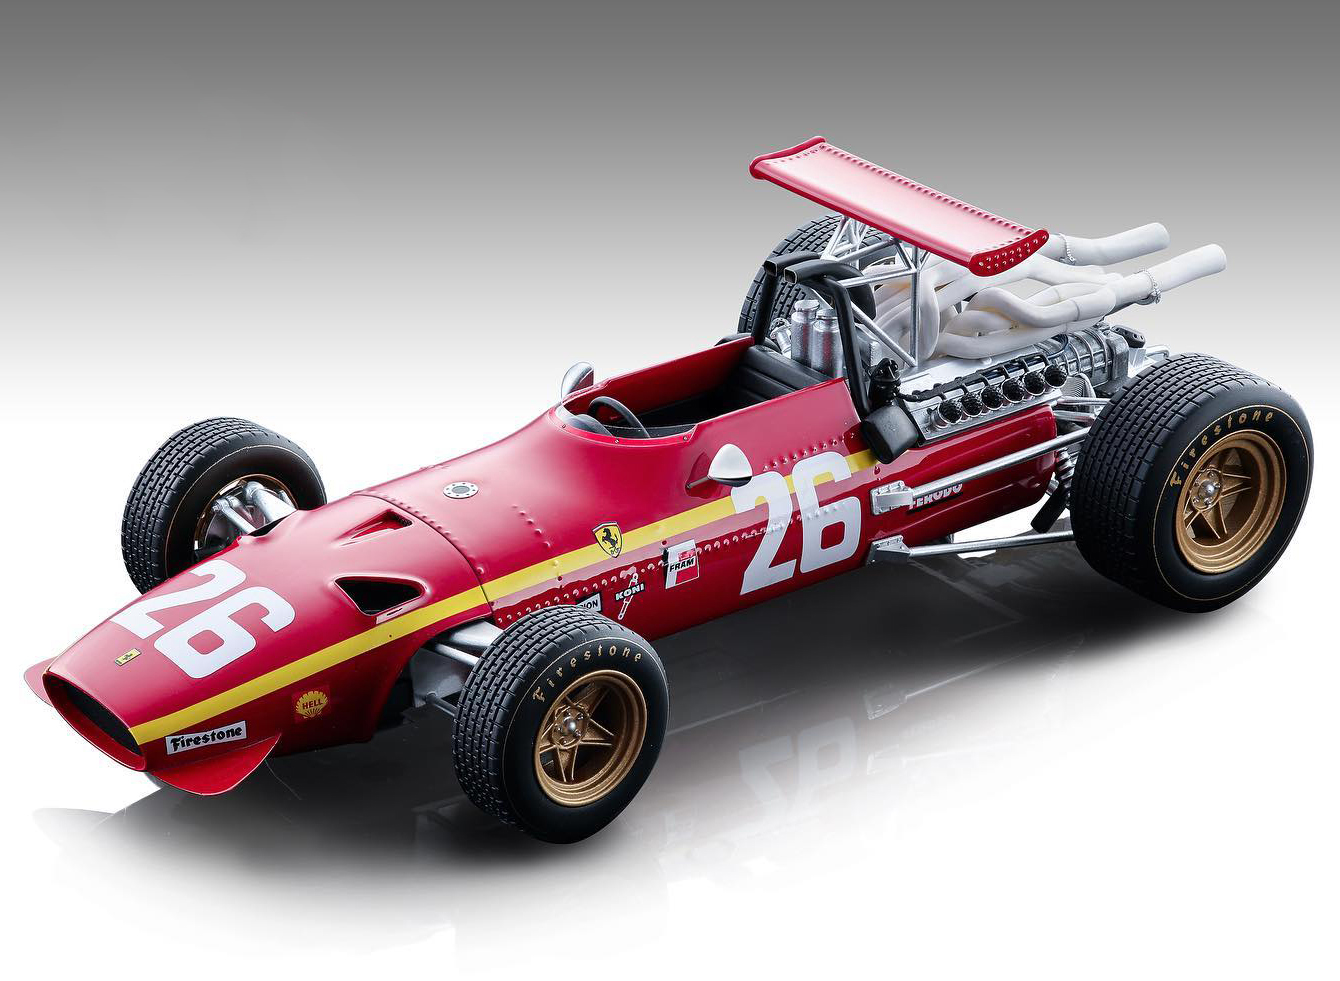 Ferrari 312 F1/68 26 Jacky Ickx Winner Formula One French Grand Prix (1968) "mythos Series" Limited Edition To 280 Pieces Worldwide 1/18 Model Car By